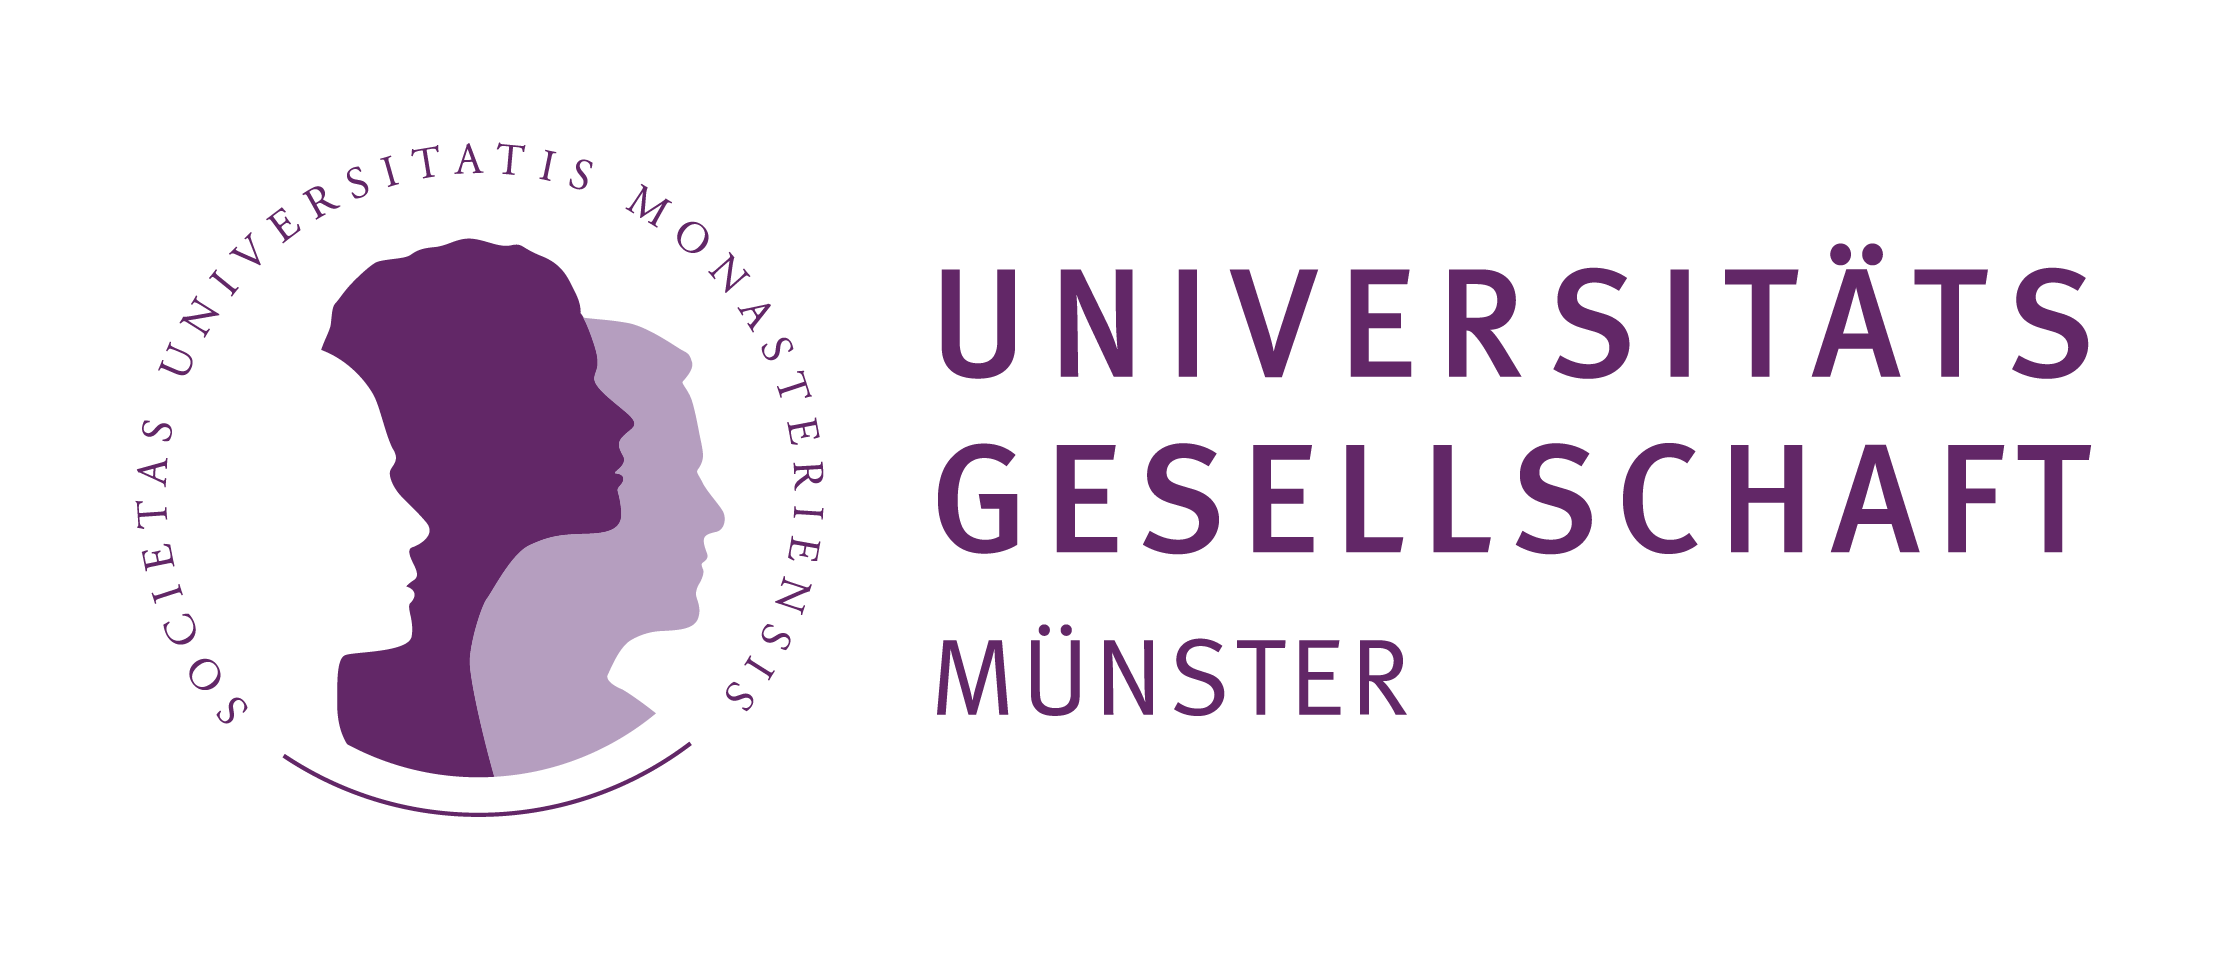 Universitätsgesellschaft Münster's logo